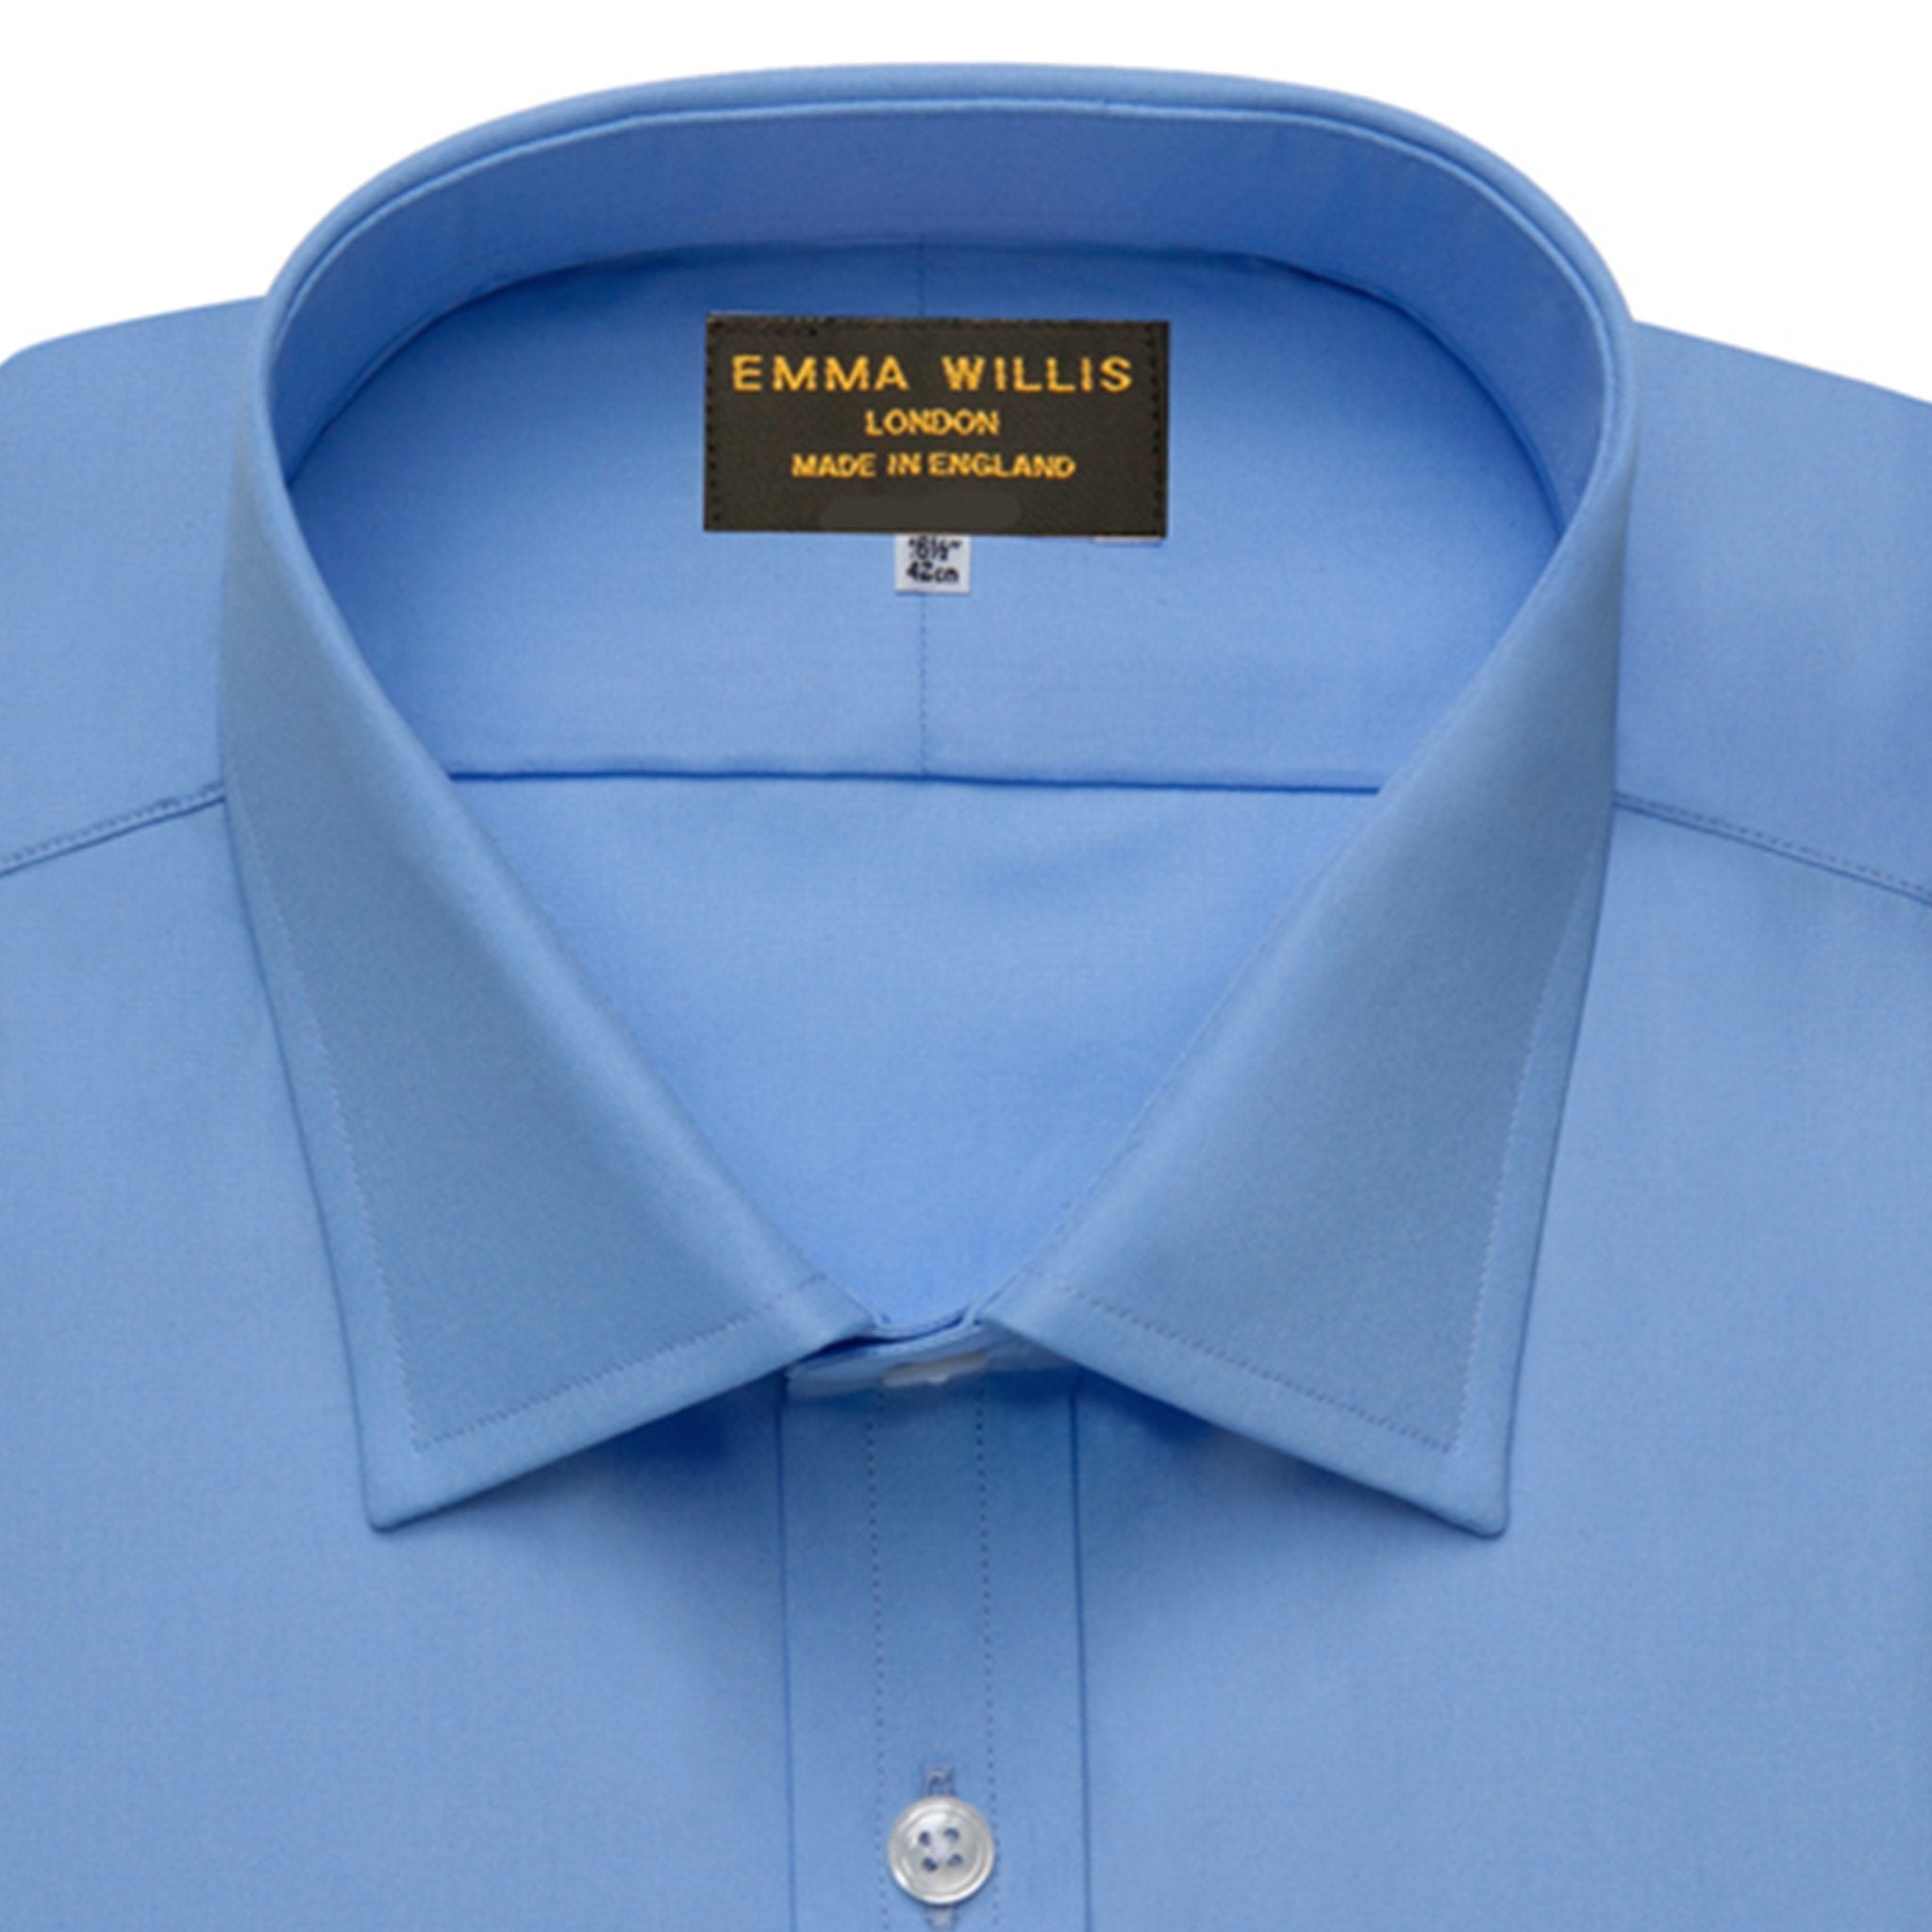 Azure Superior Cotton Shirt - Bespoke freeshipping - Emma Willis